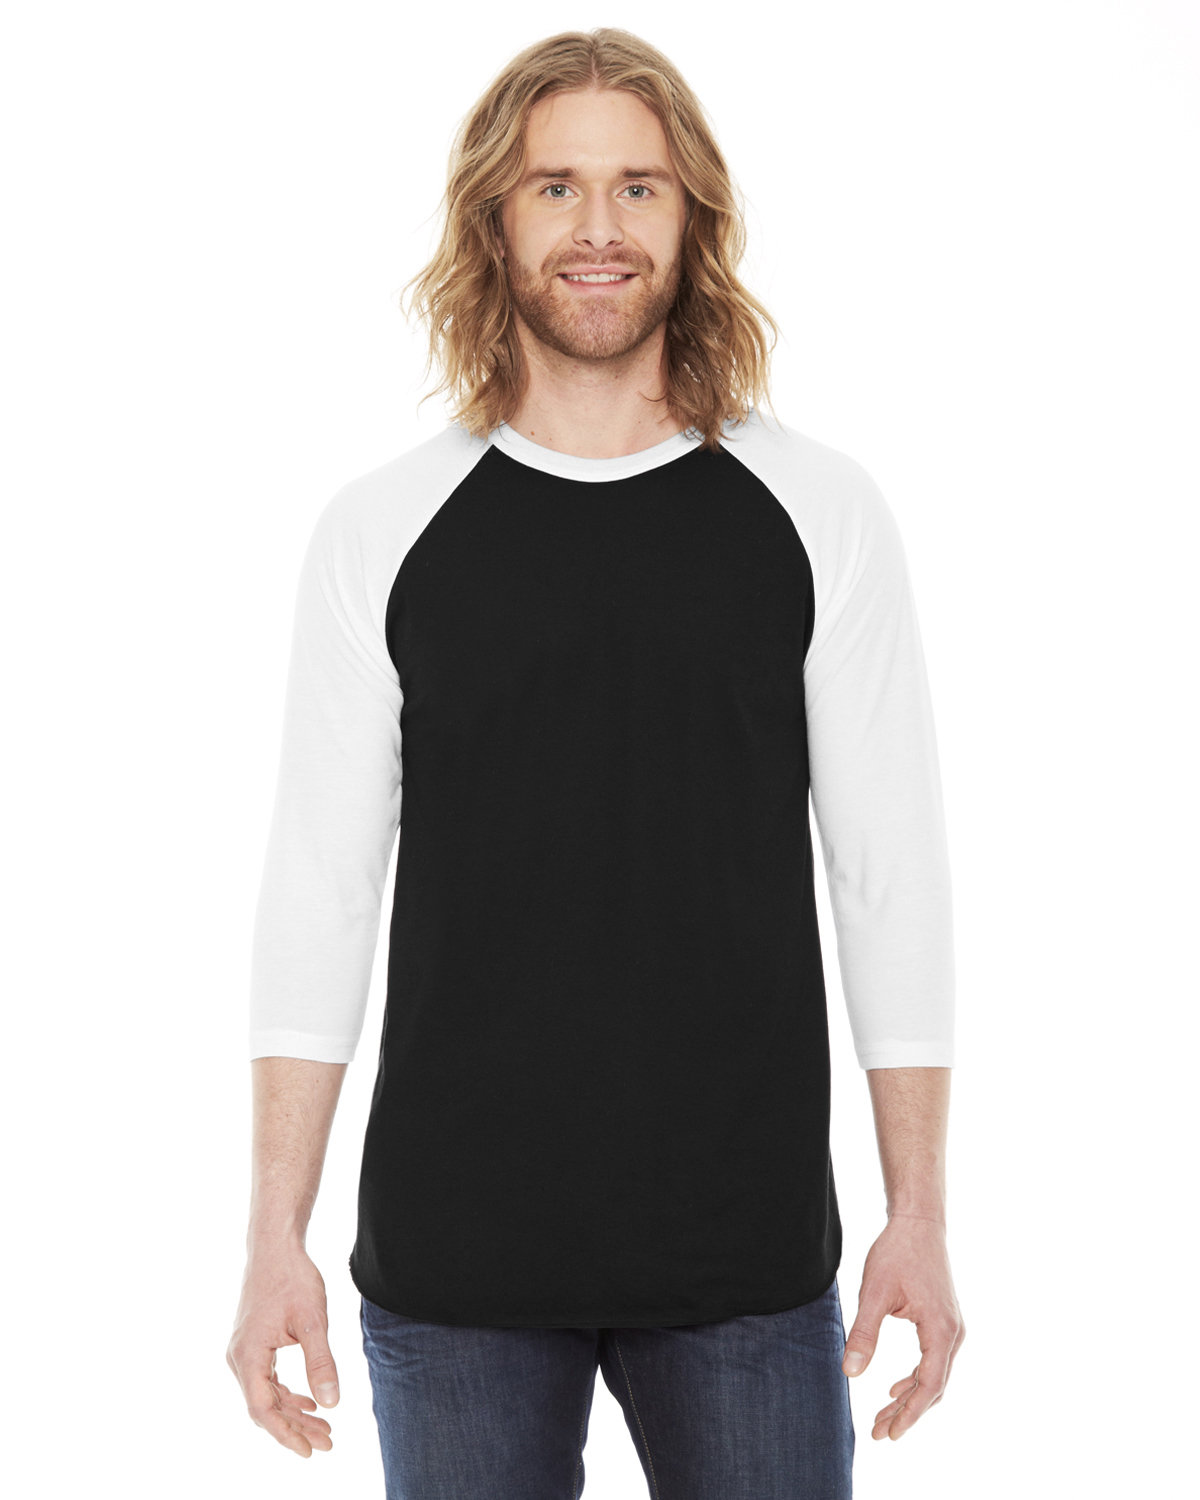 American Apparel Unisex Poly-Cotton 3/4-Sleeve Raglan T-Shirt BLACK/ WHITE 